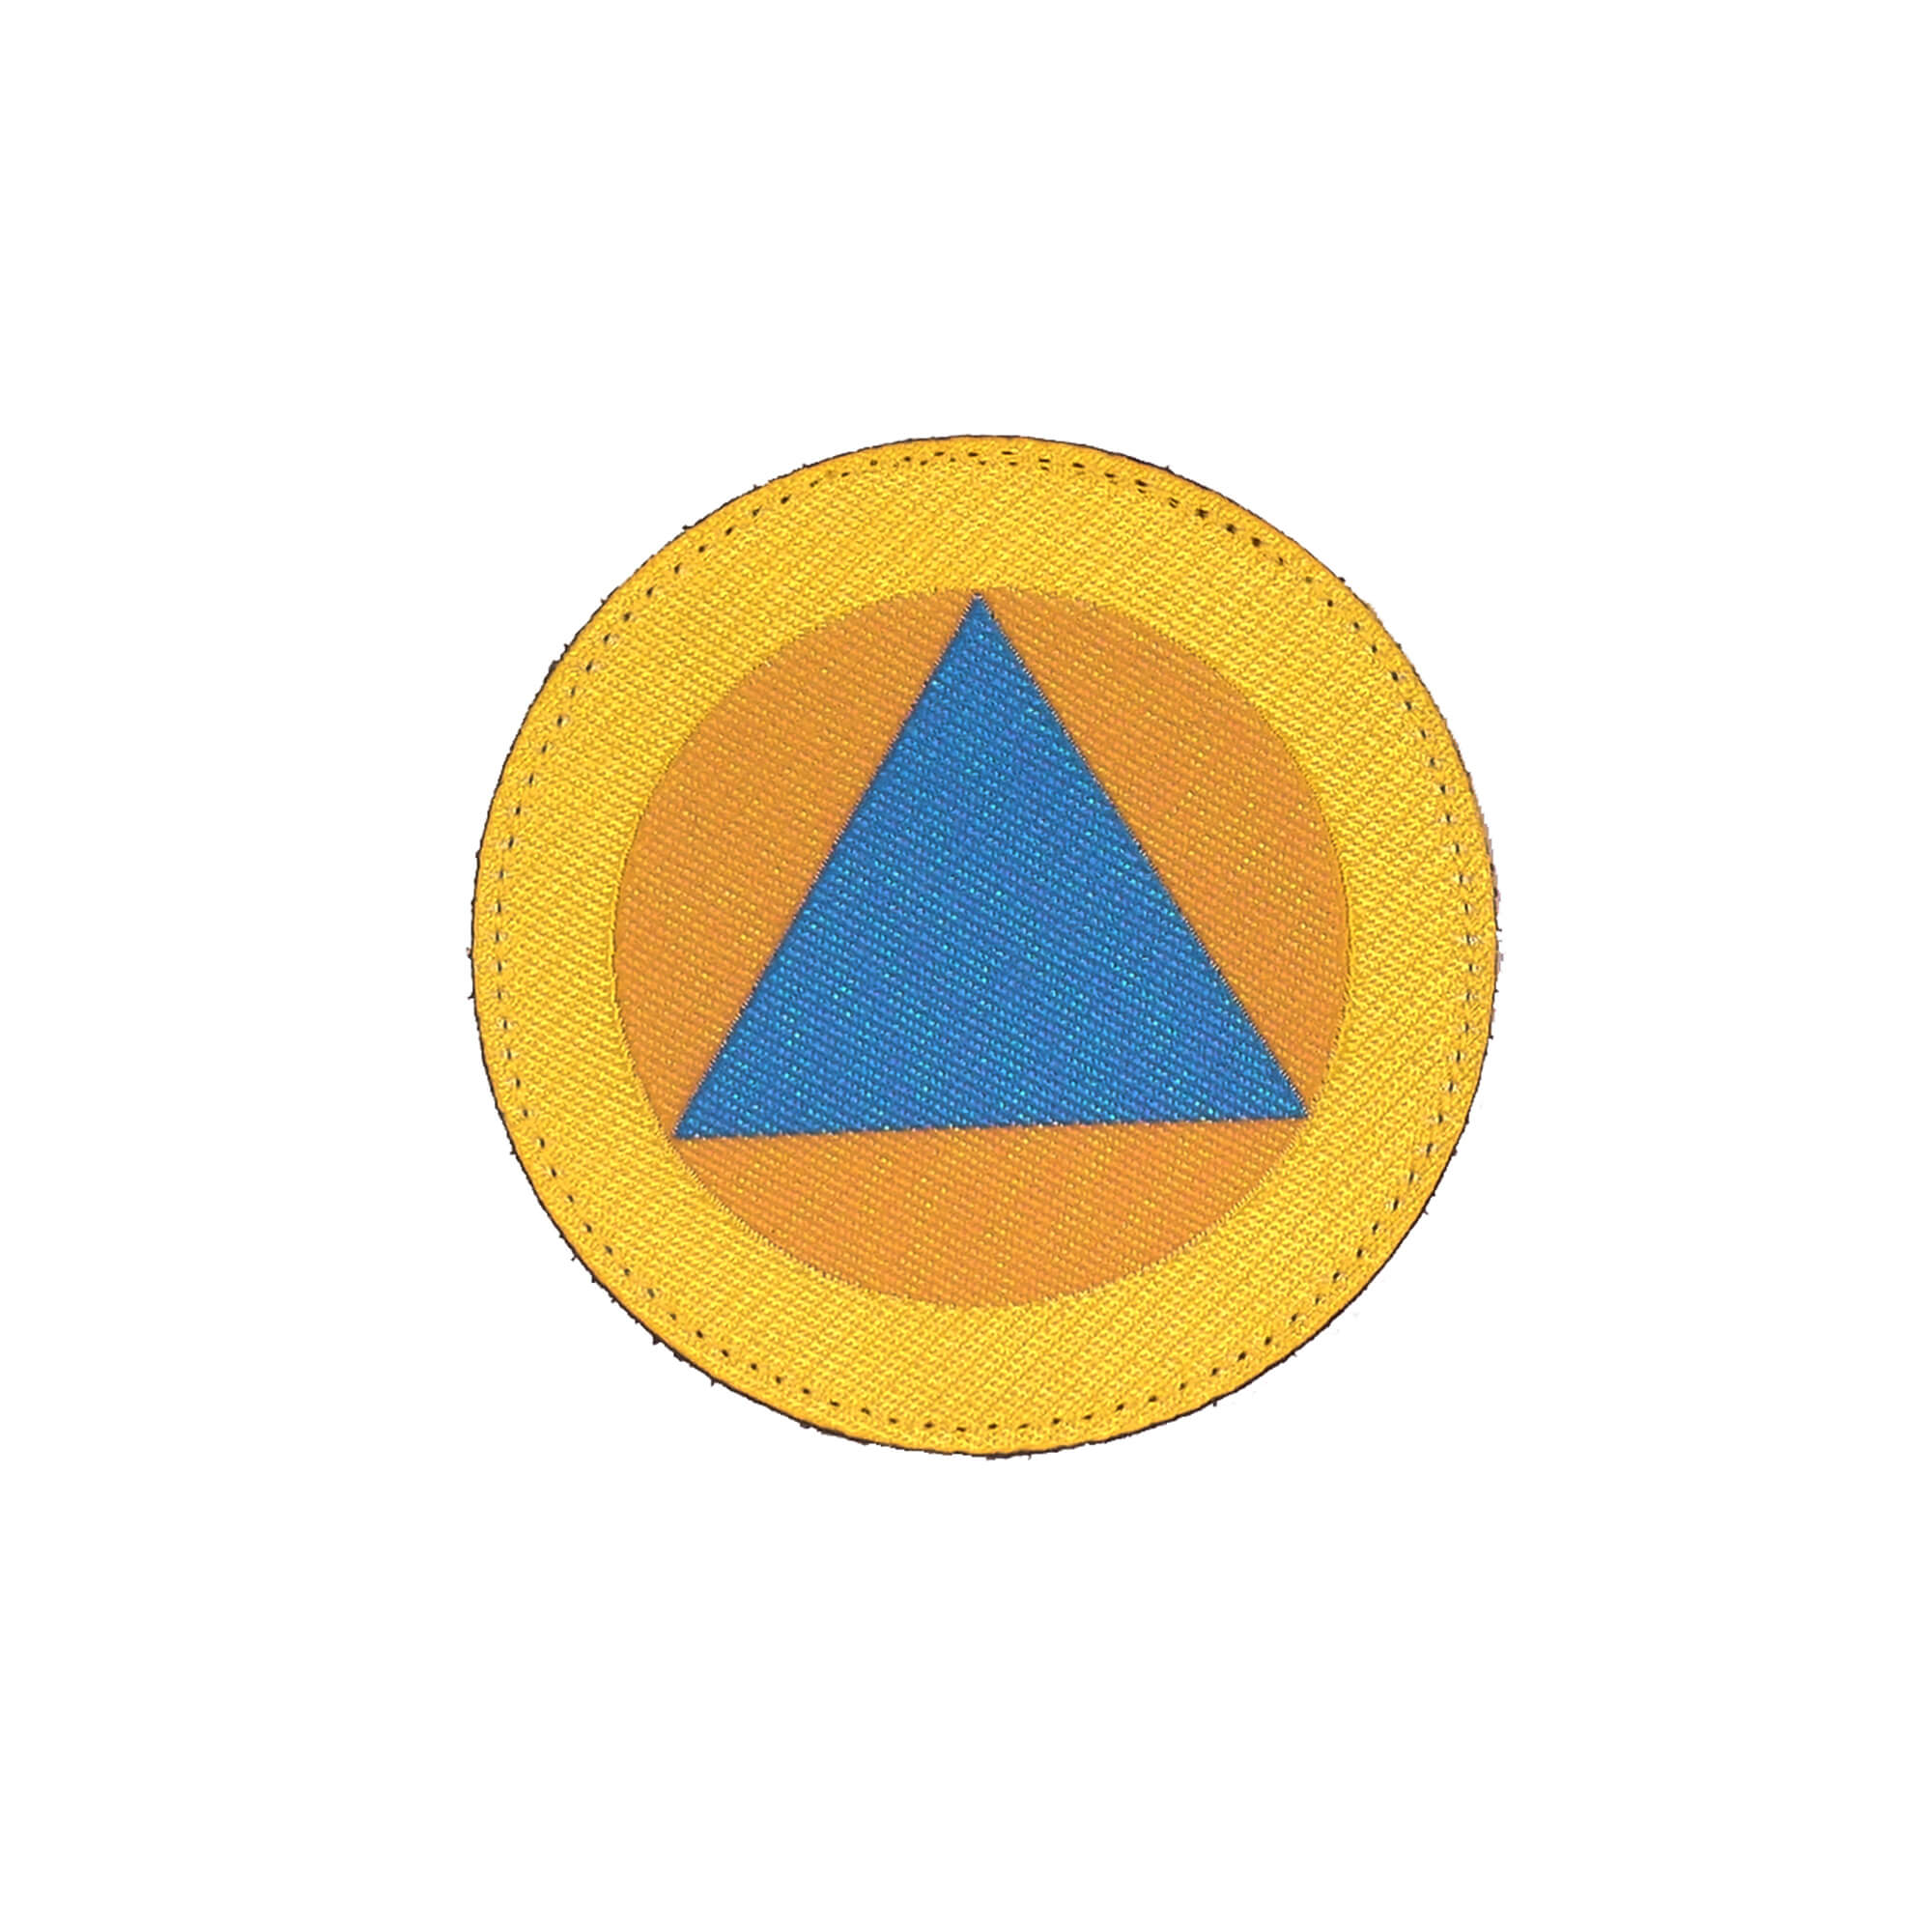 Sleeve emblem Civil Protection